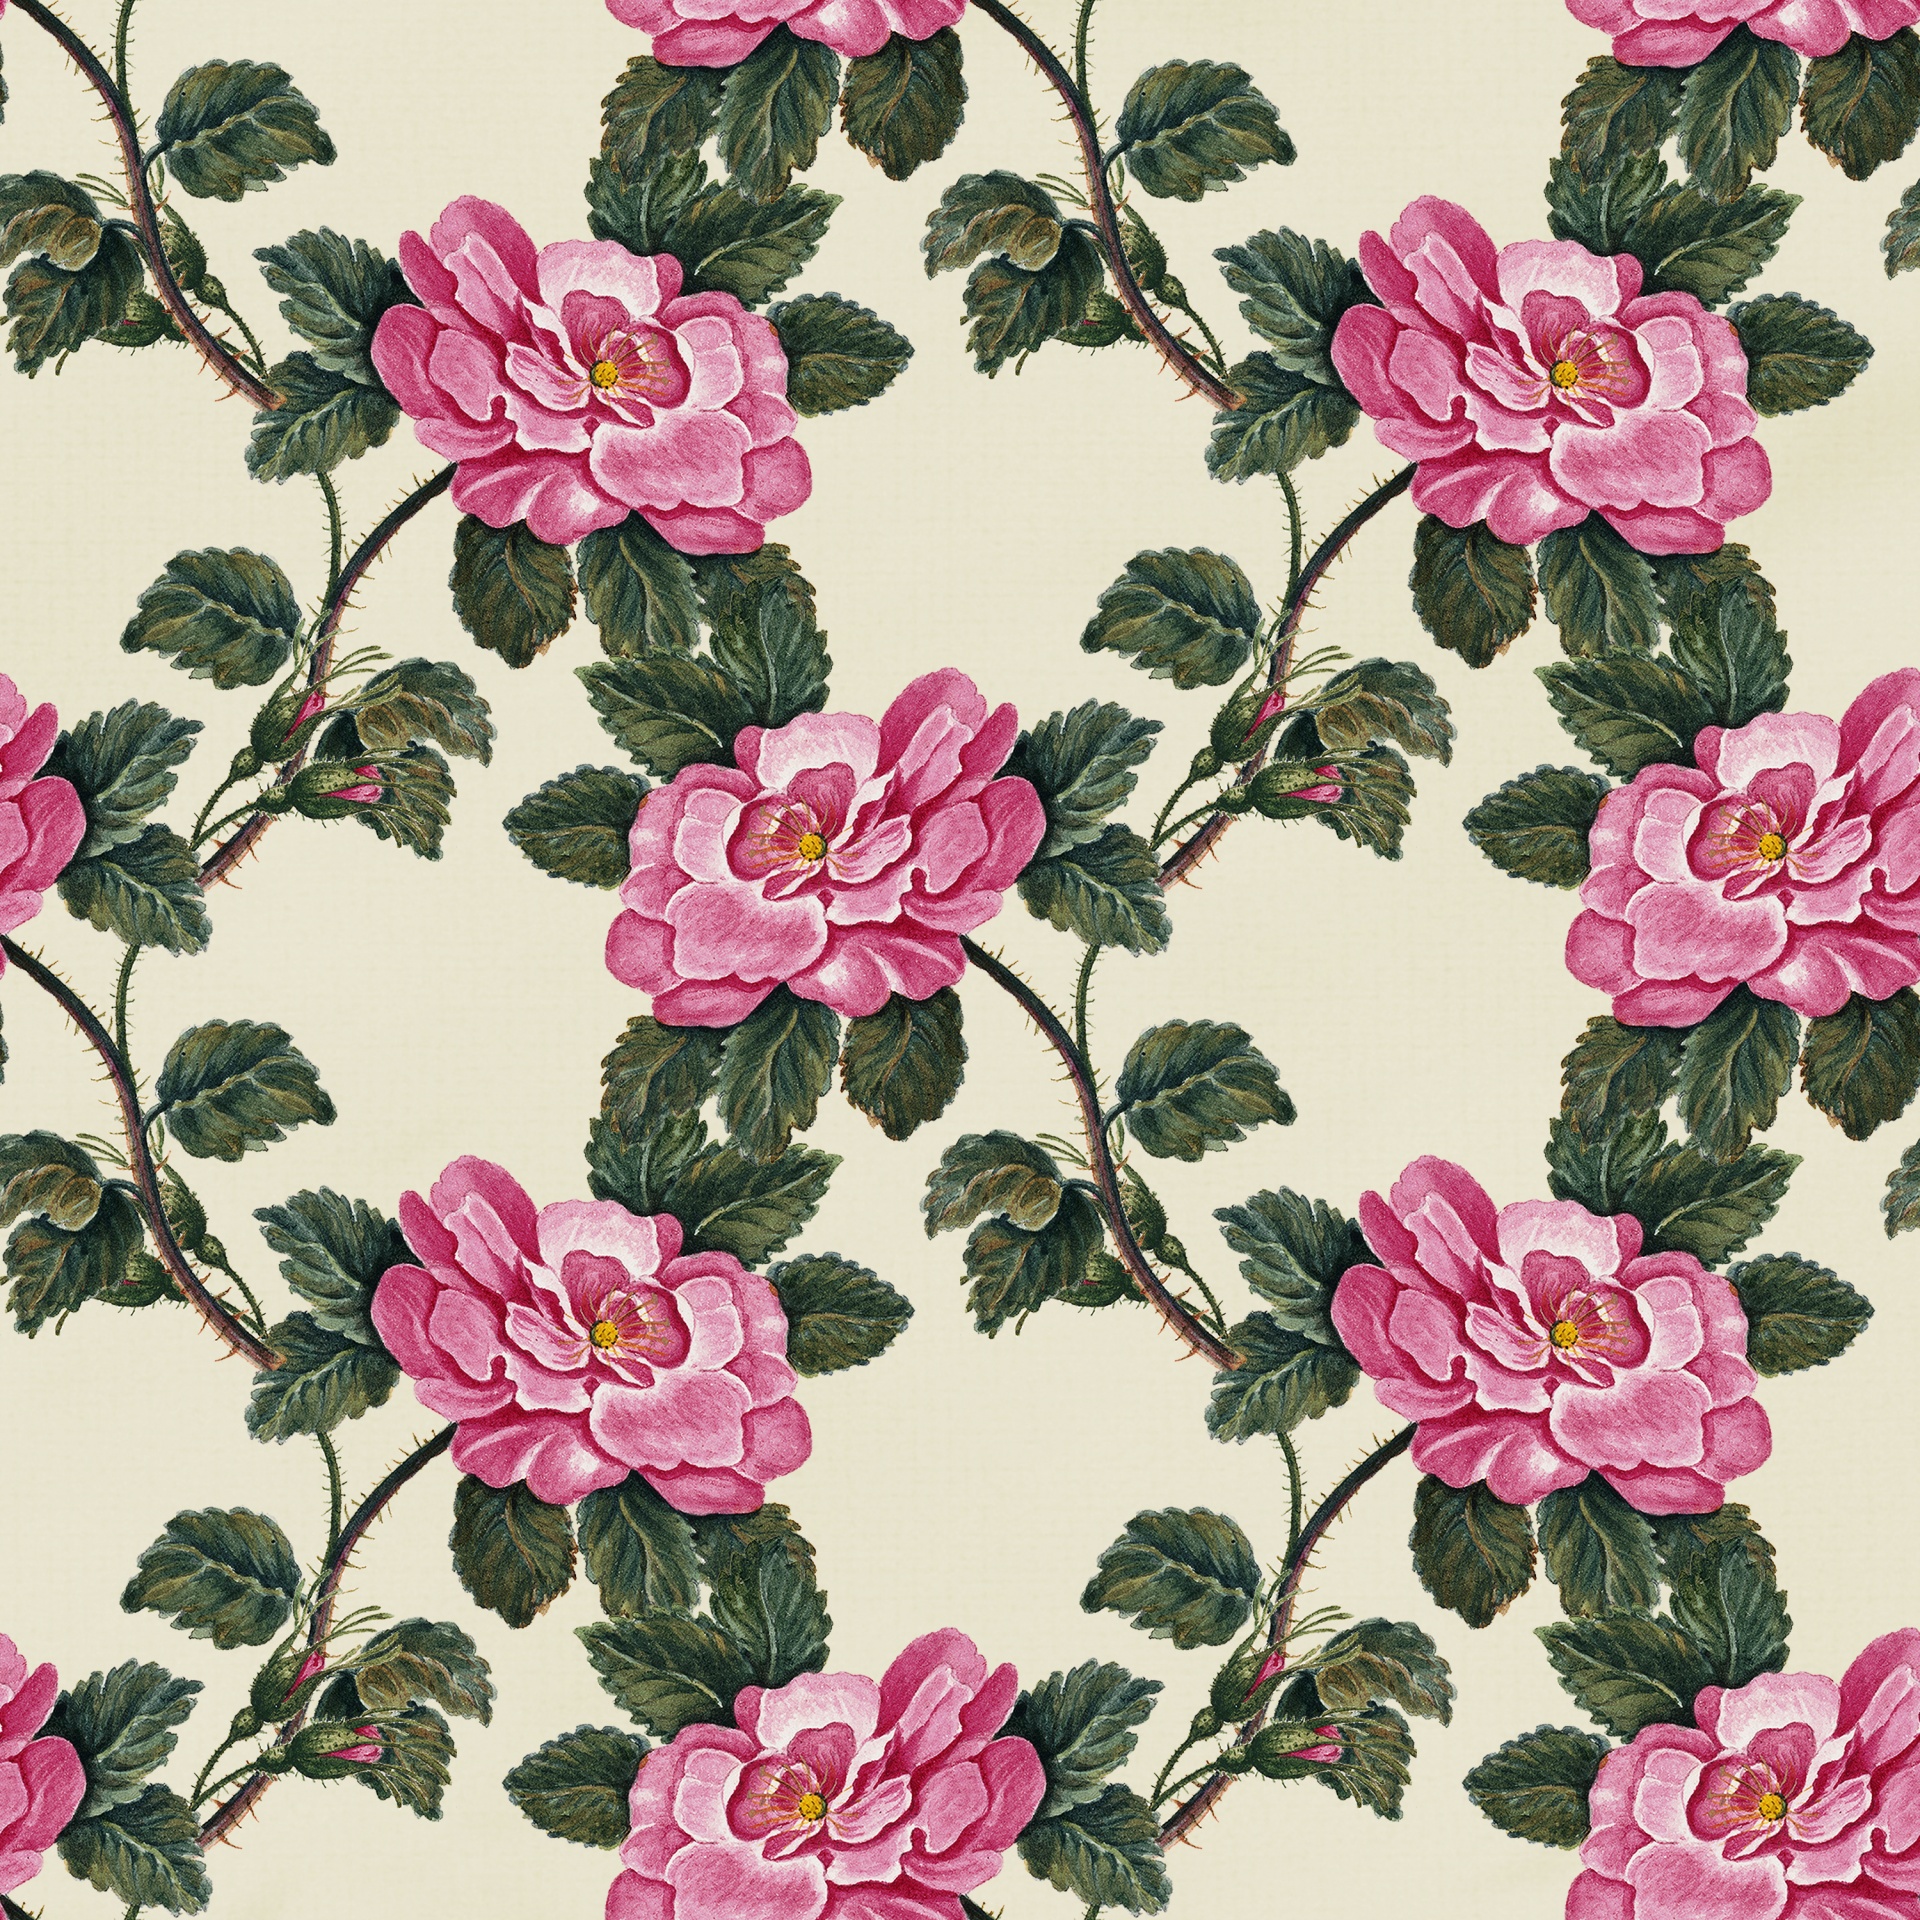 Vintage pink roses seamless wallpaper pattern background